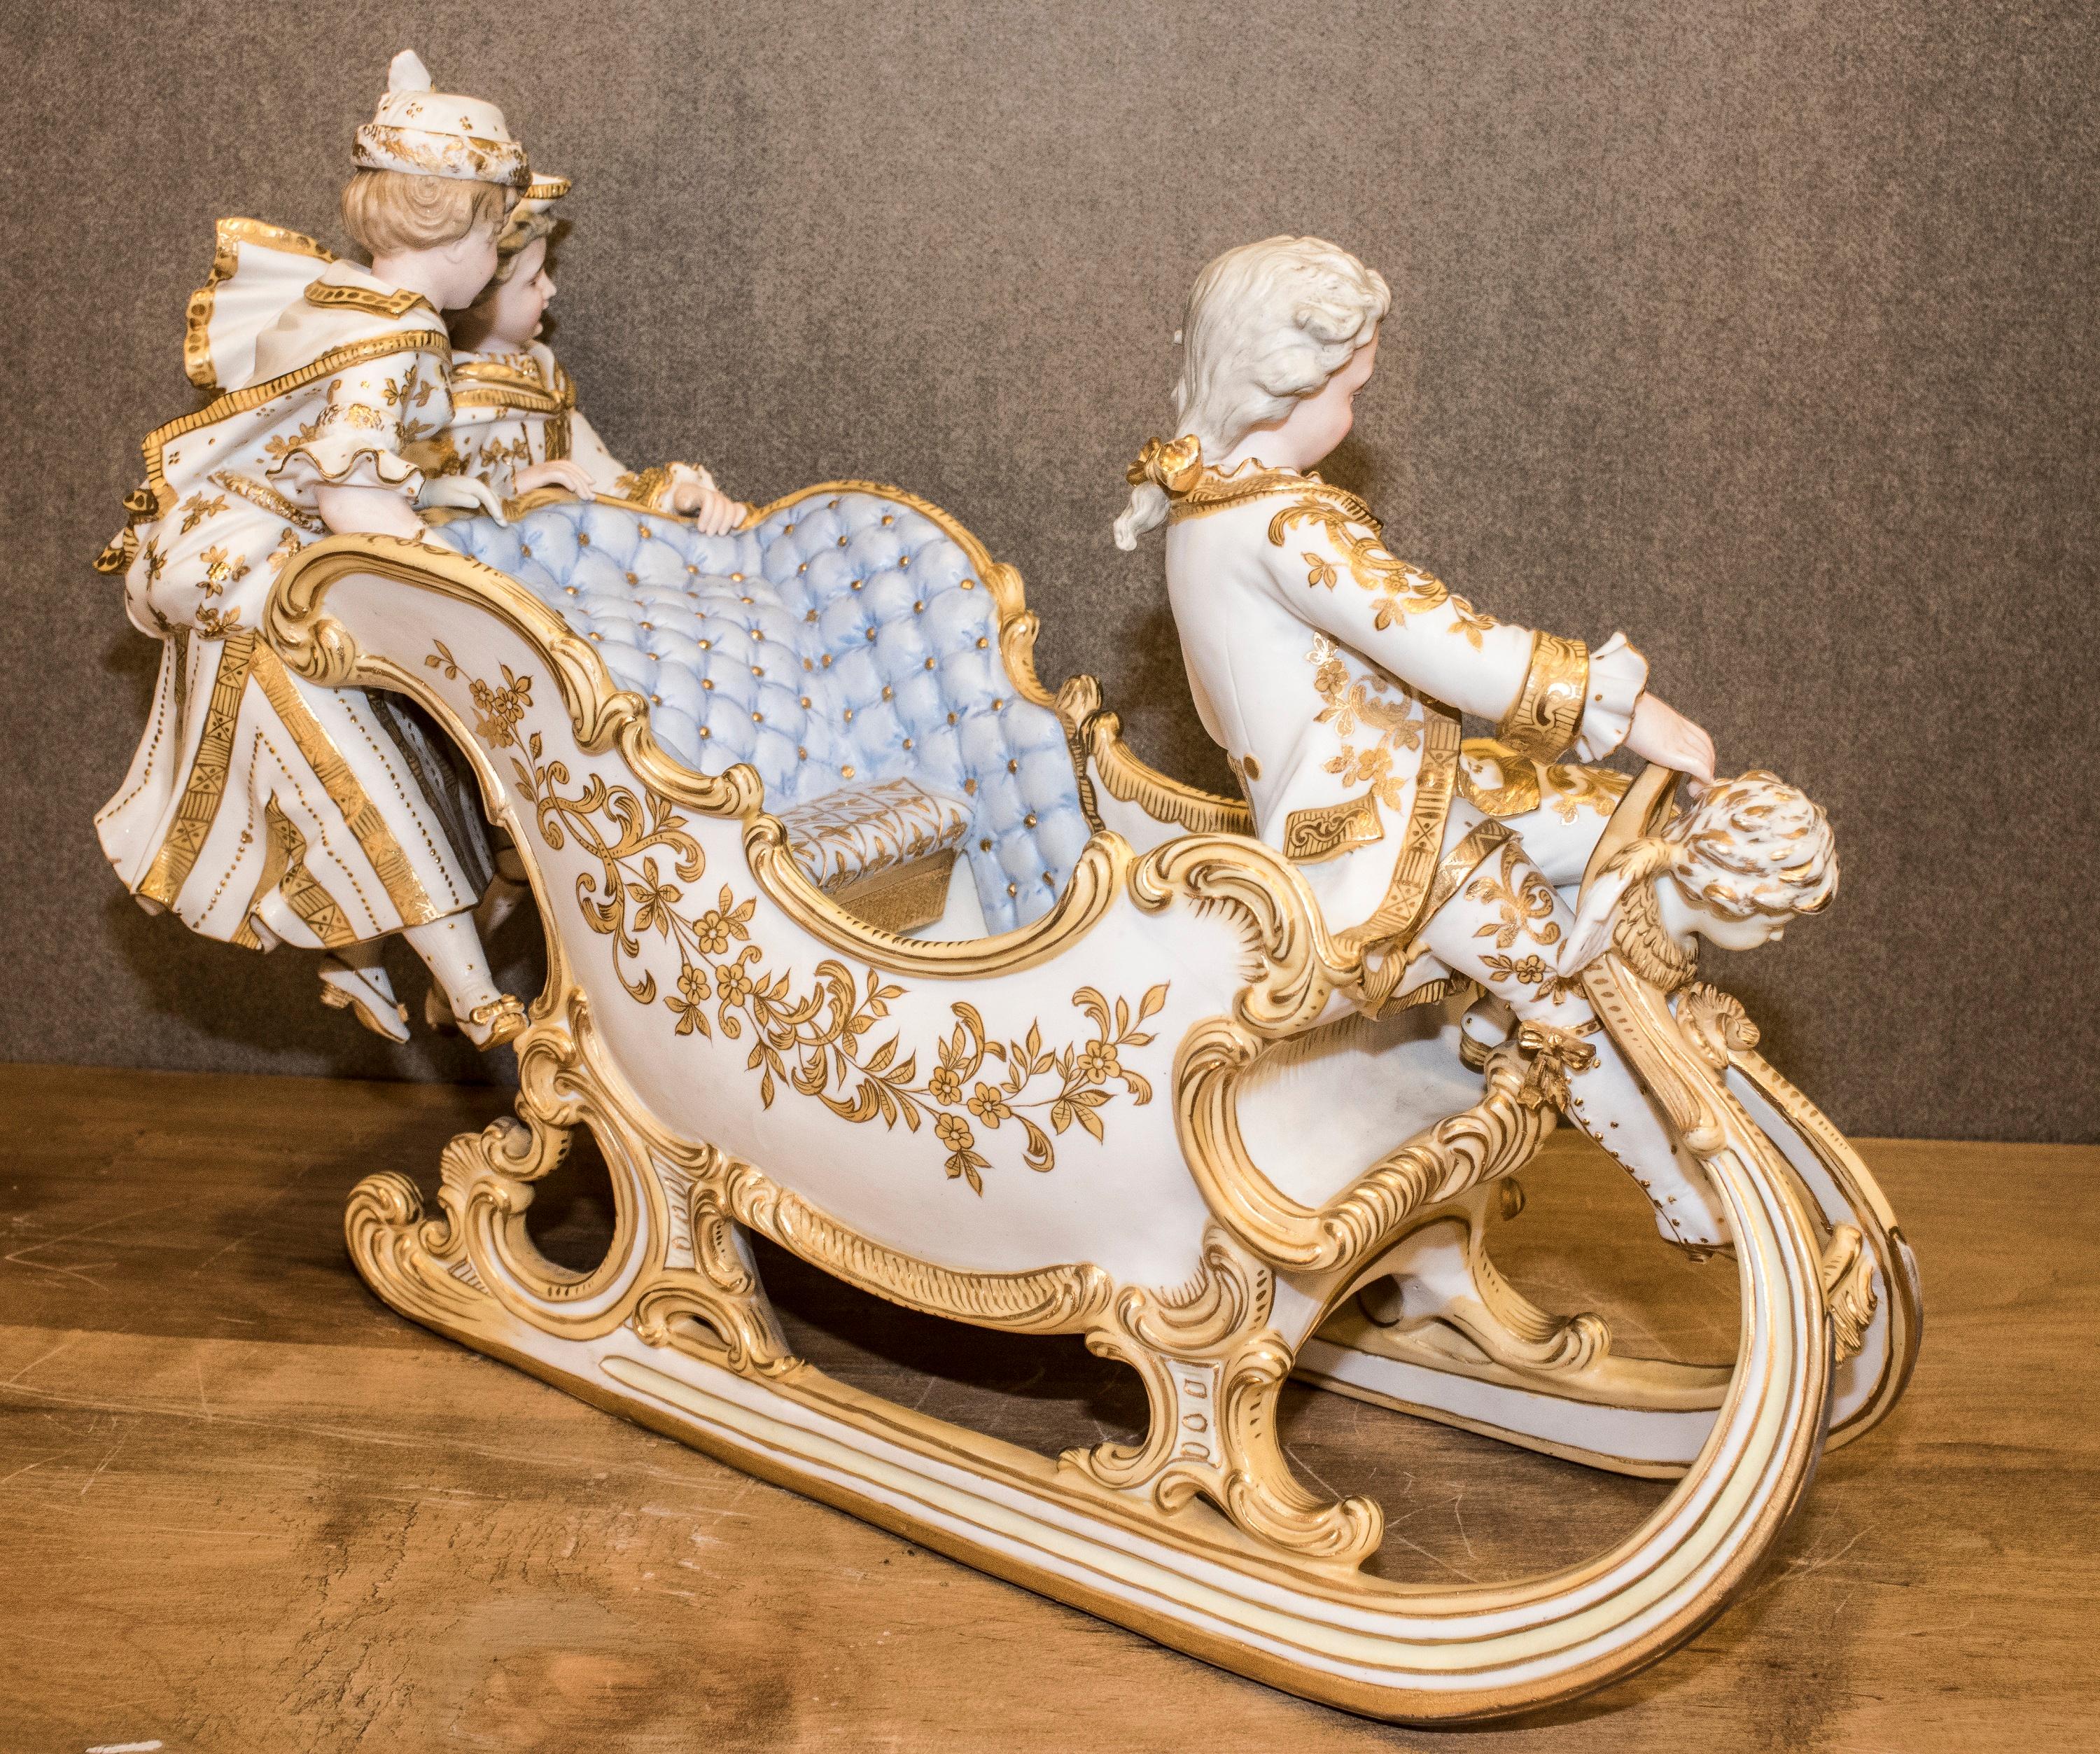 Polychromed 19th Century Polychrome Porcelain Central European Baroque Sleigh